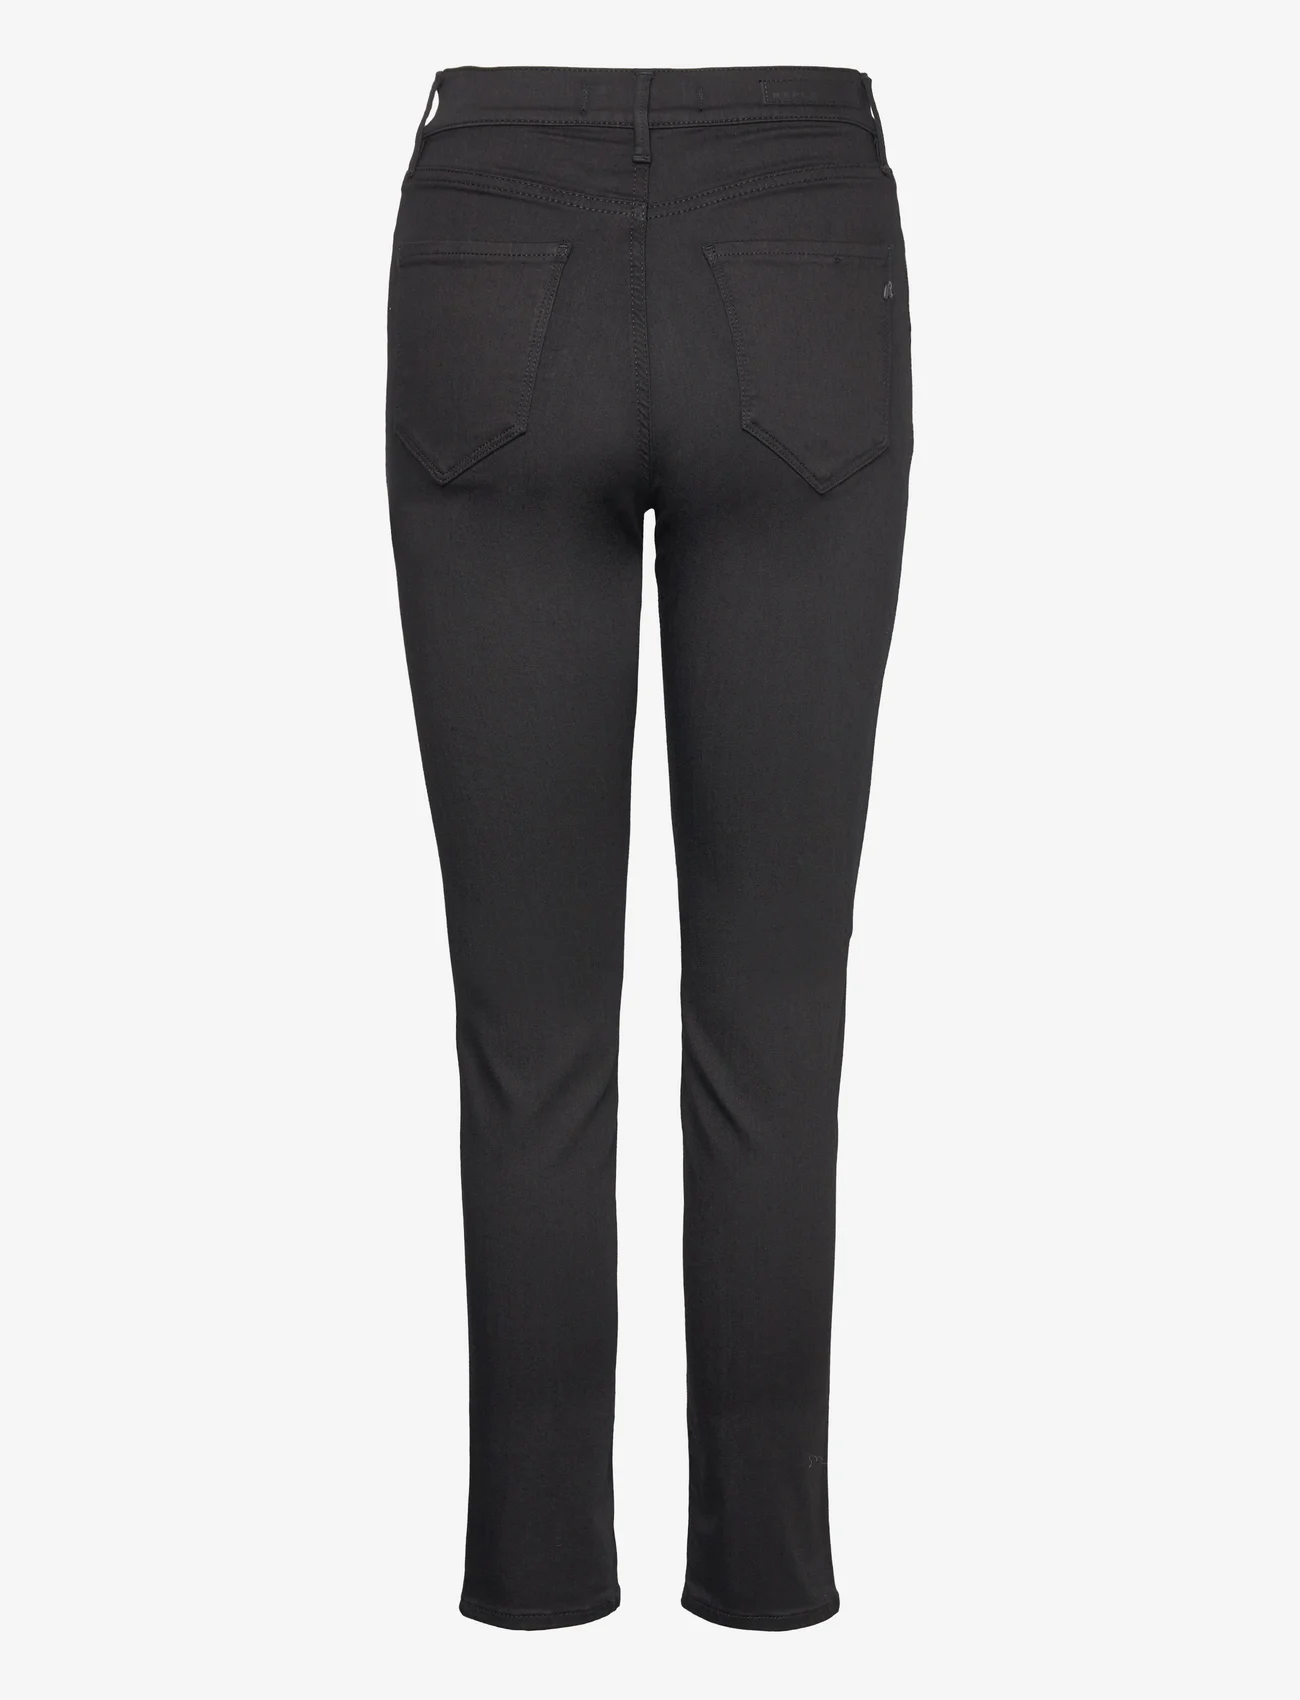 Replay - MJLA Trousers SUPER SLIM HIGH WAIST - slim fit jeans - black - 1